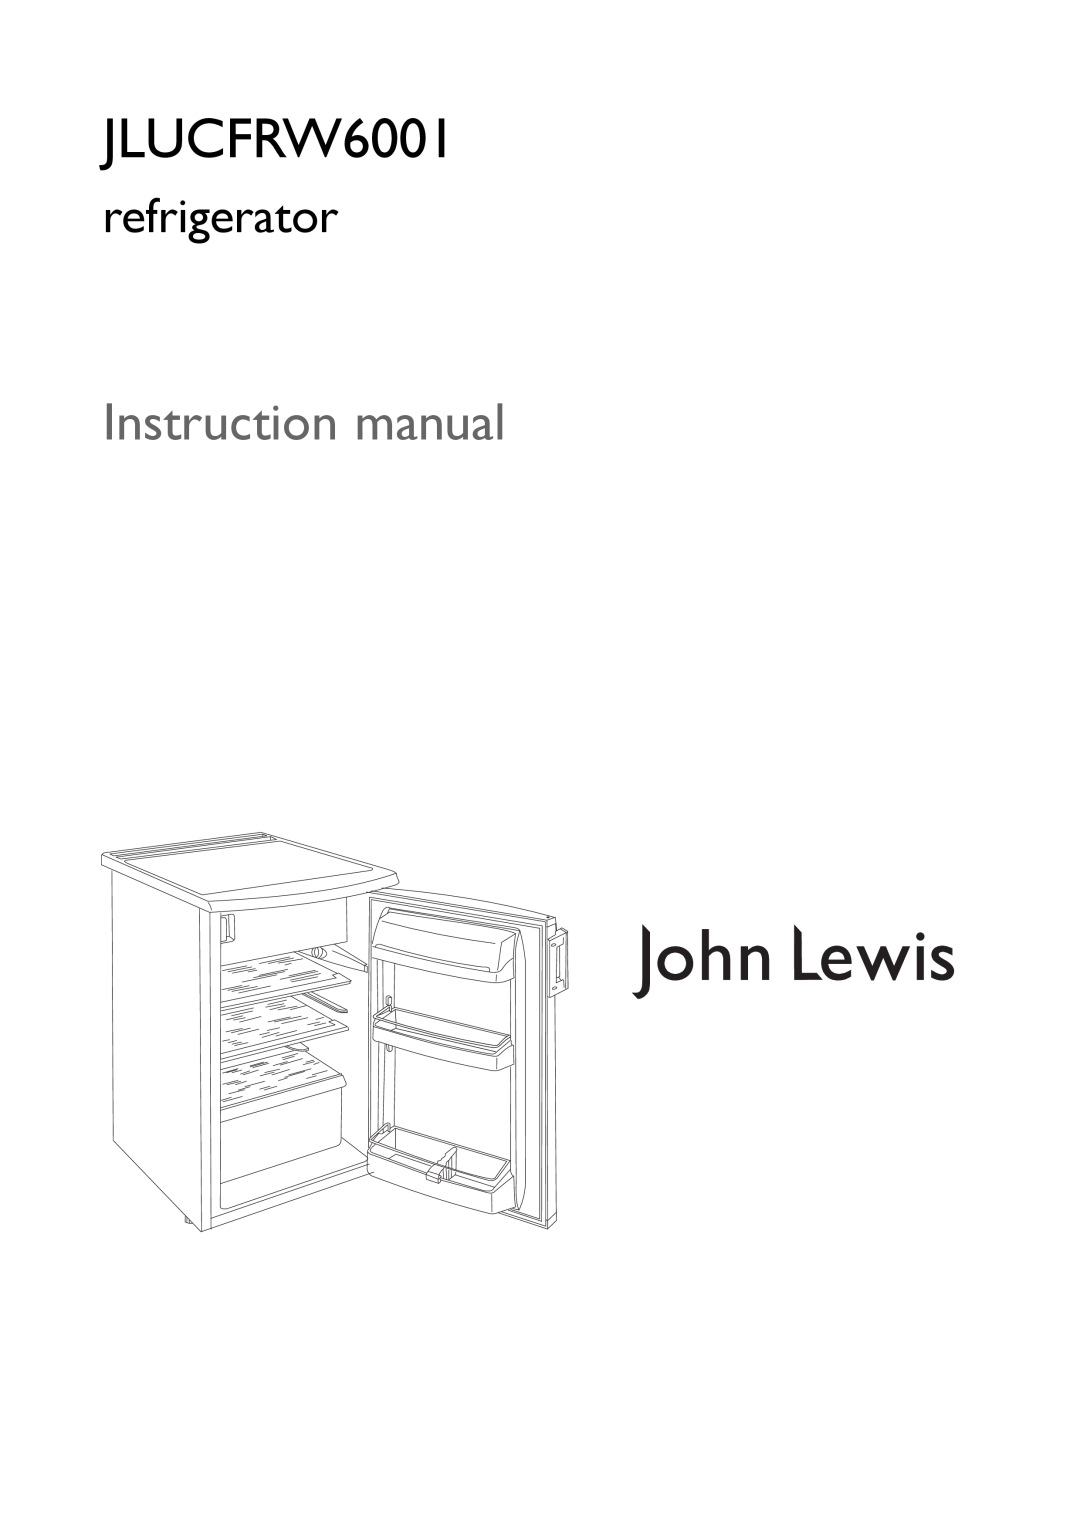 John Lewis JLUCFRW6001 instruction manual refrigerator 